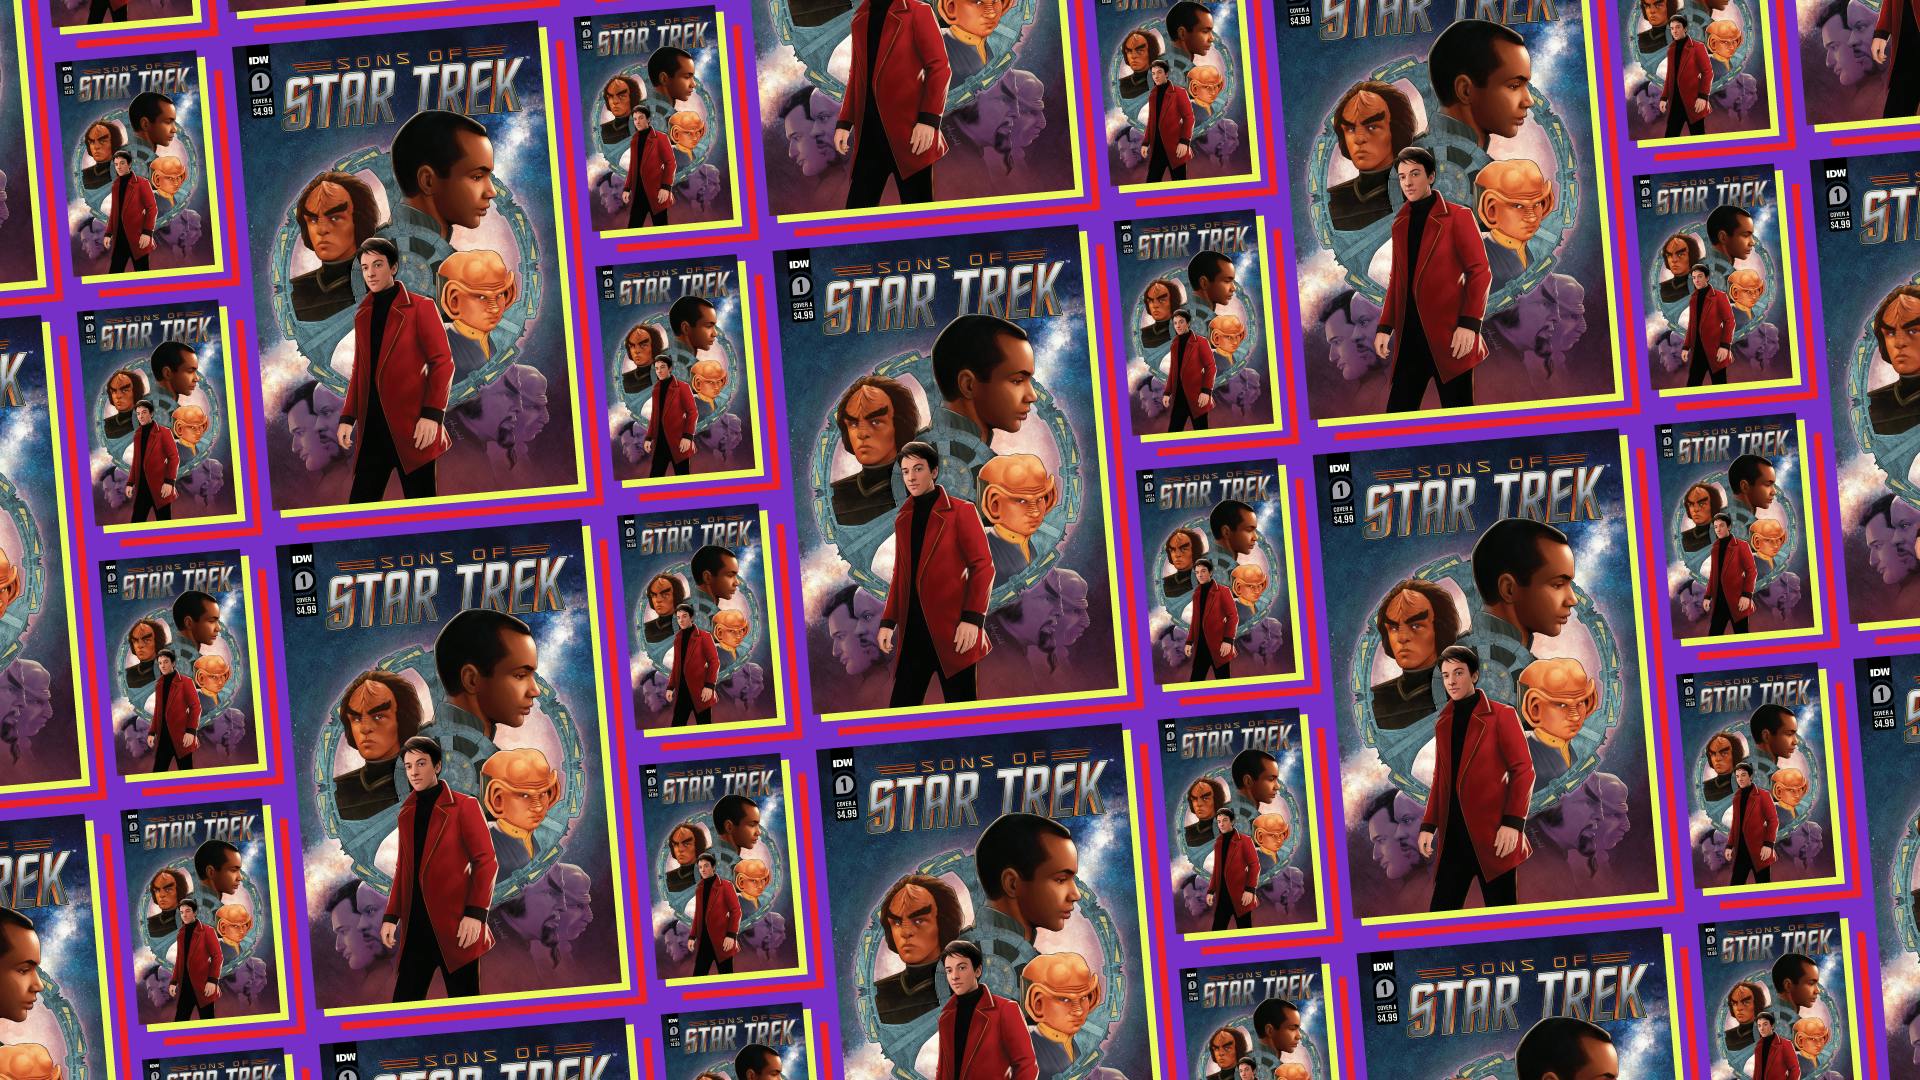 Star Trek: Sons of Star Trek cover featuring Jake Sisko, Nog, Alexander Rozhenko, and Q Junior